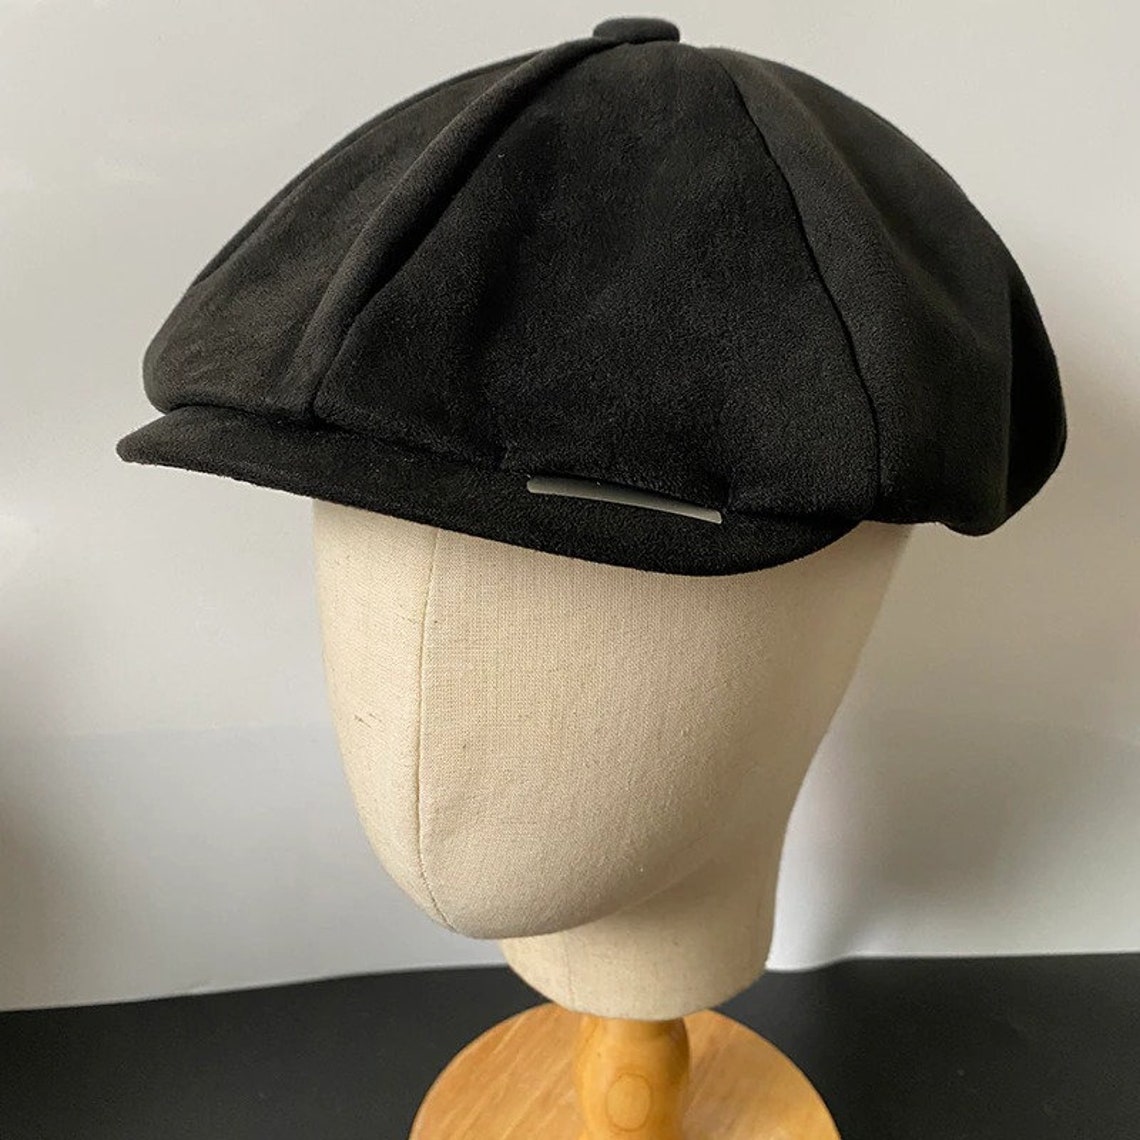 Peaky Blinders Inspired Hat With Razor Blade Fake Razor - Etsy